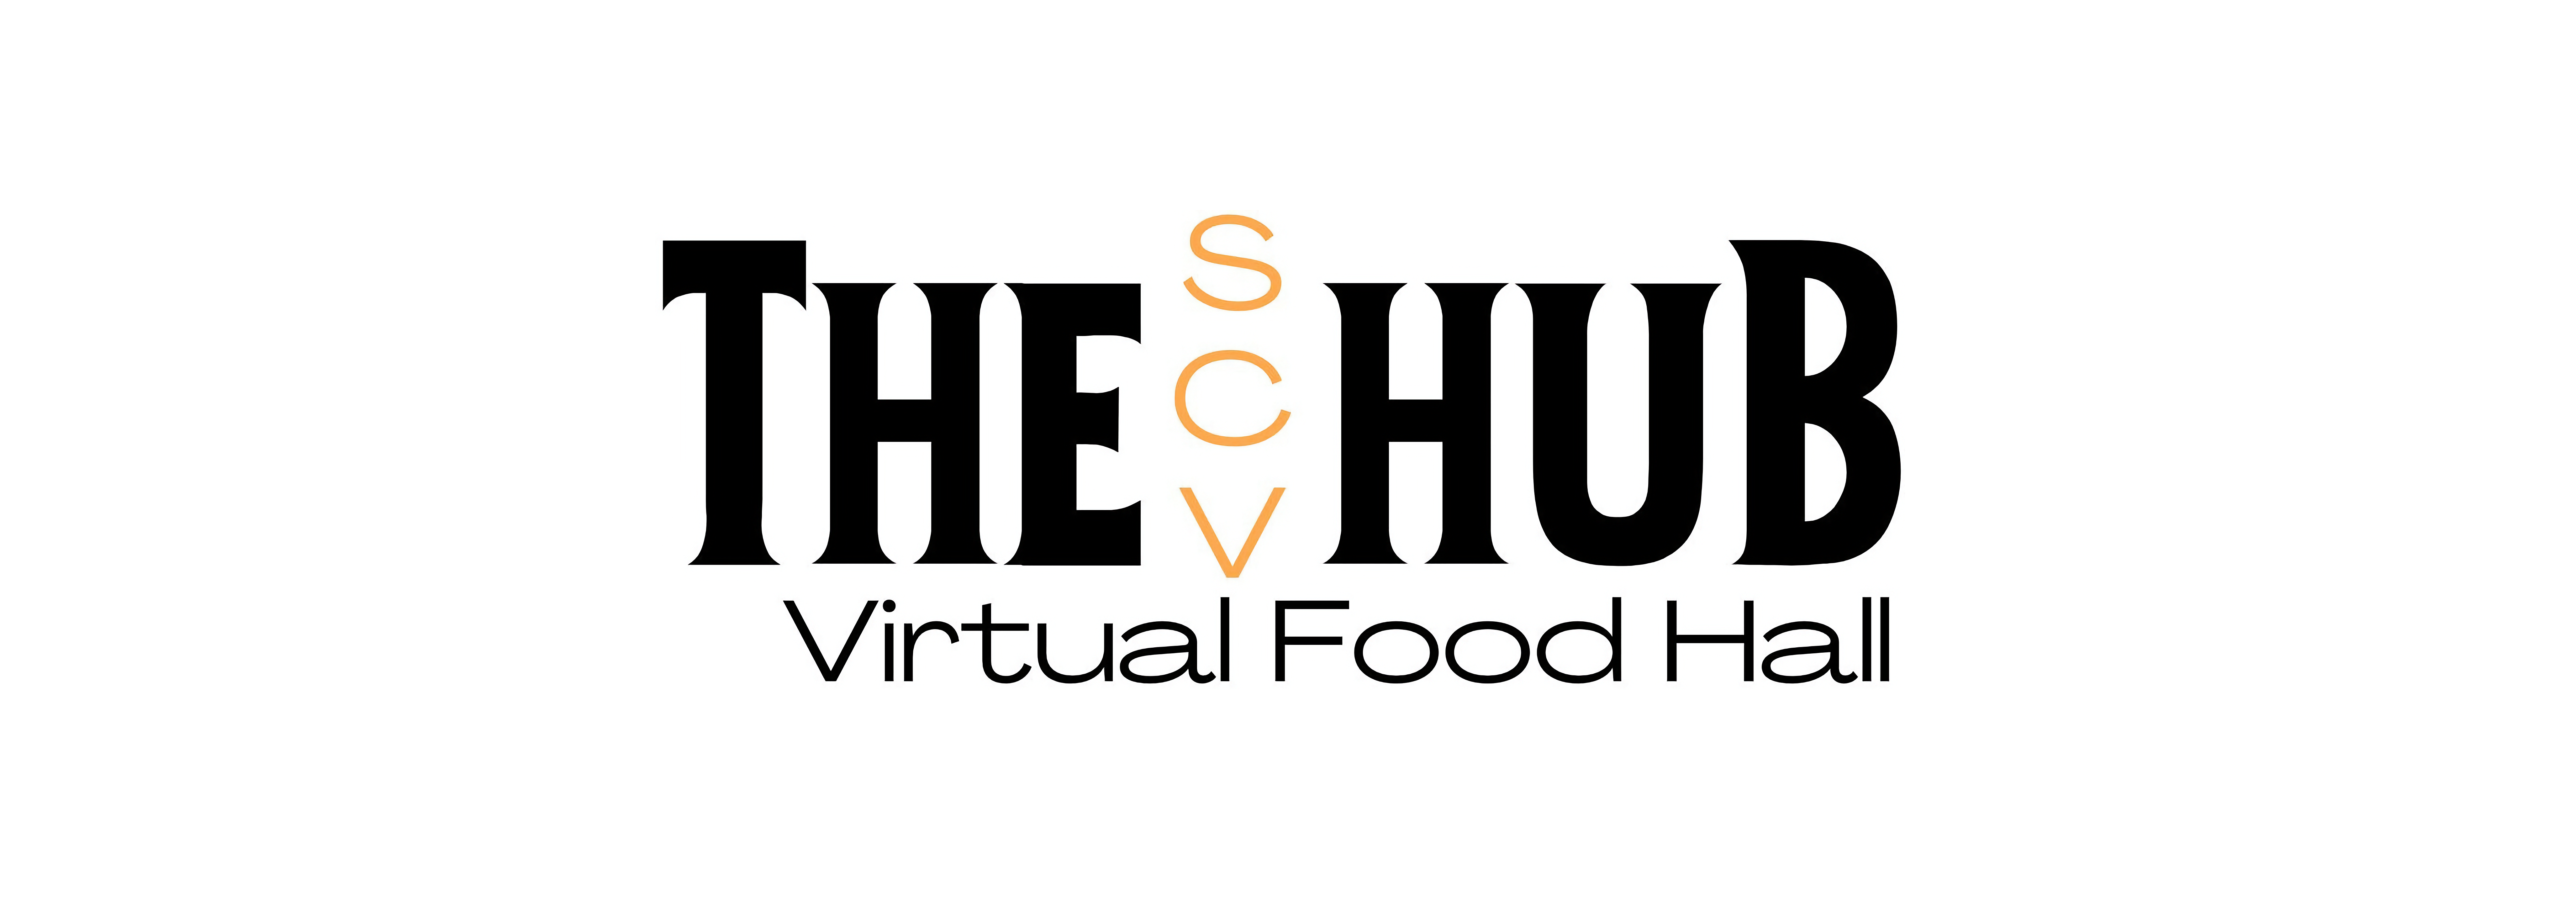 The SCV Hub Virtual Food Hall